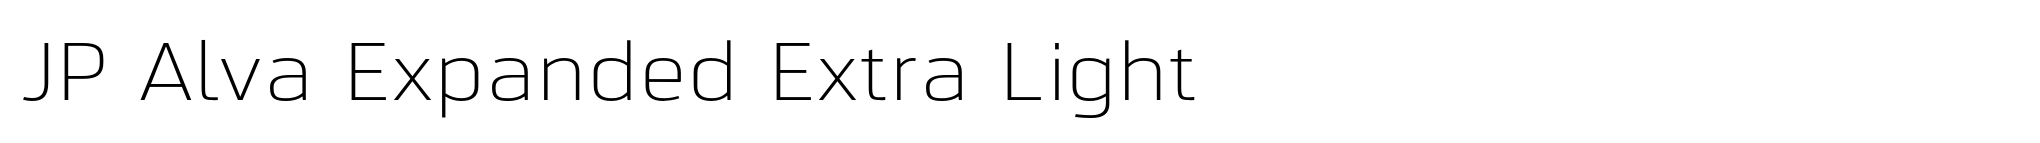 JP Alva Expanded Extra Light image